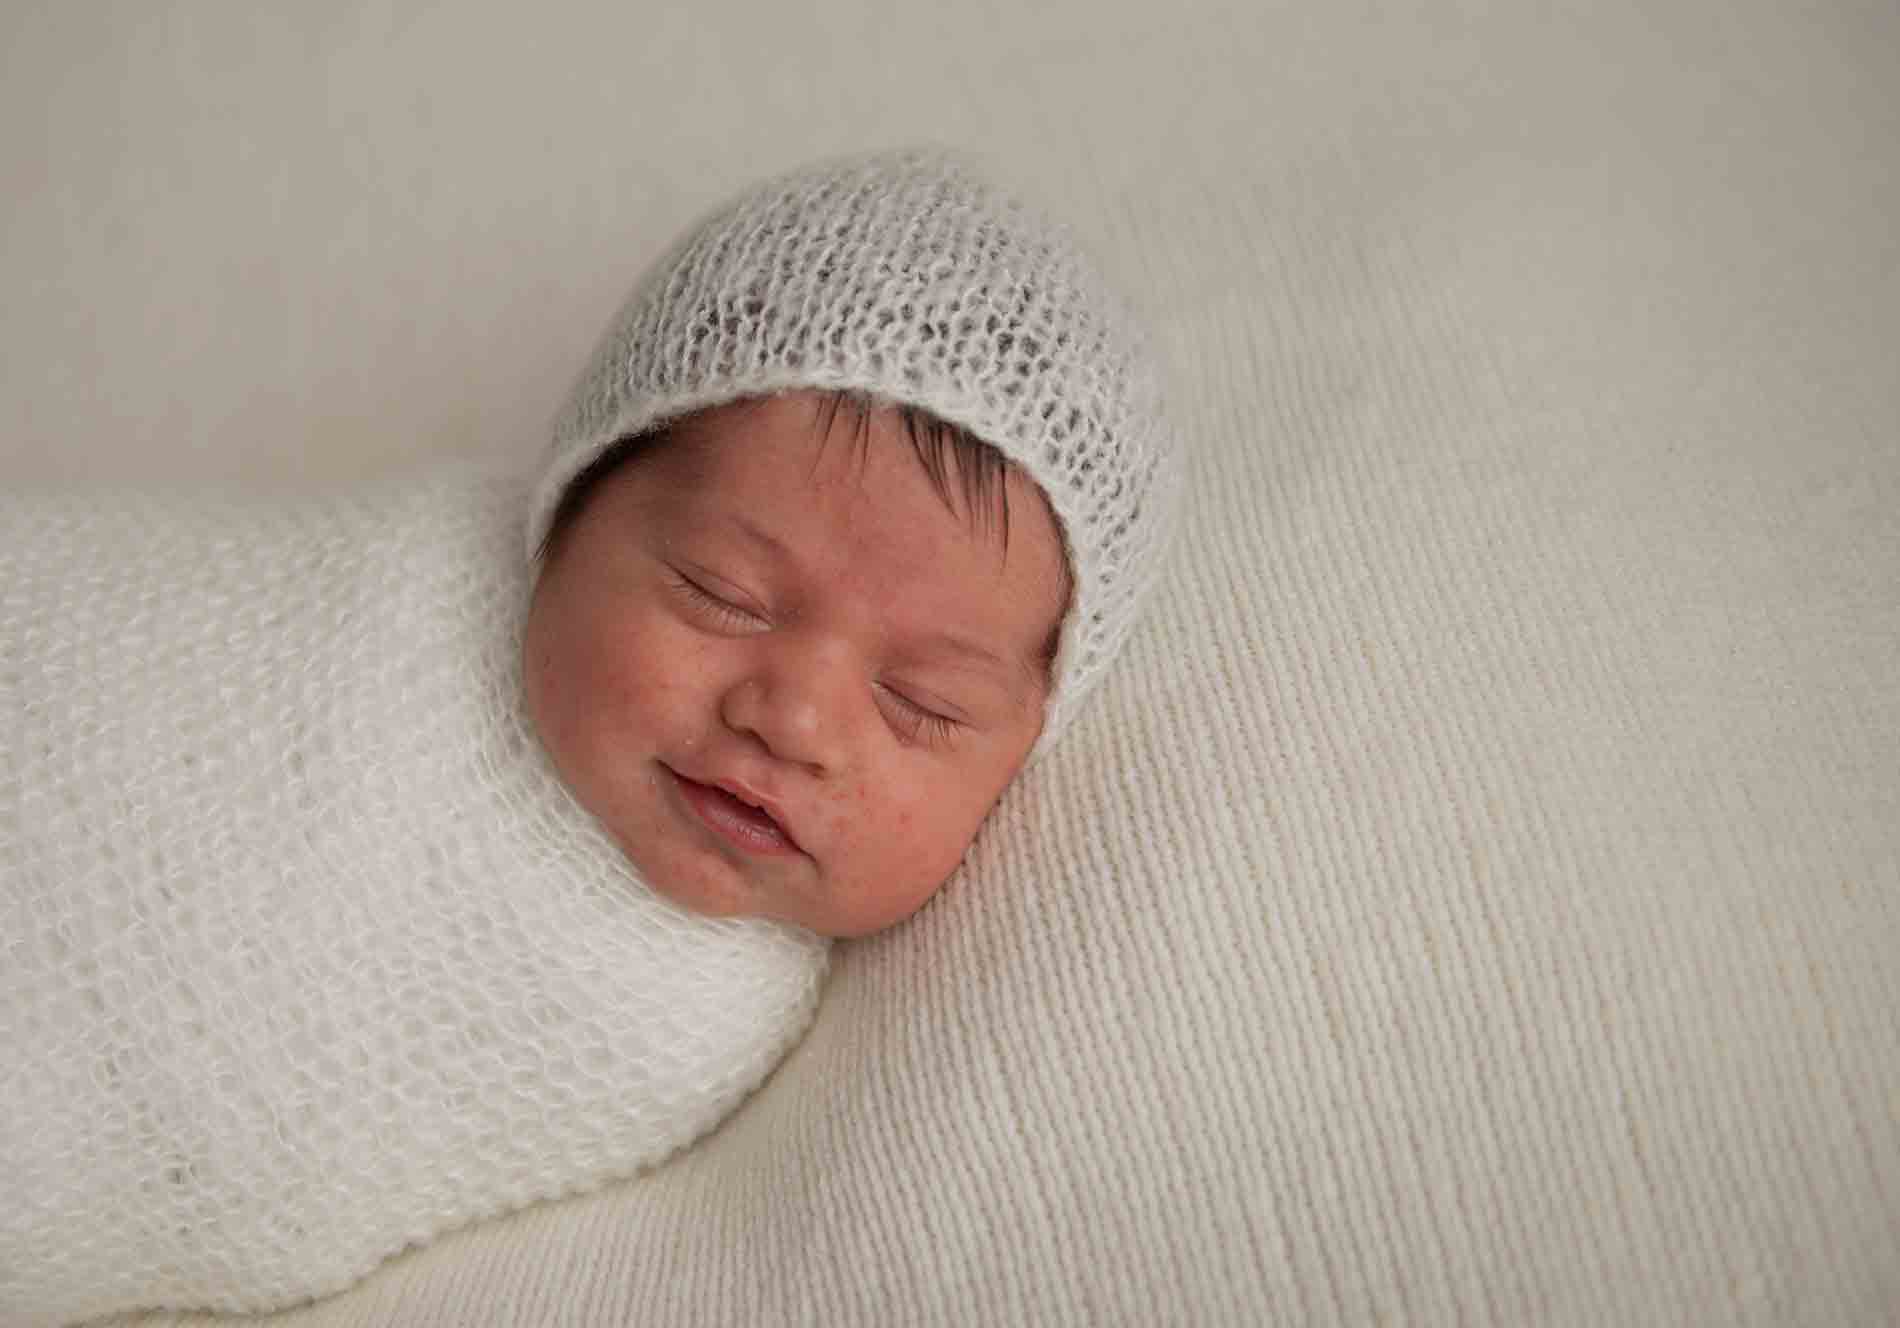 Closeup of a newborn baby